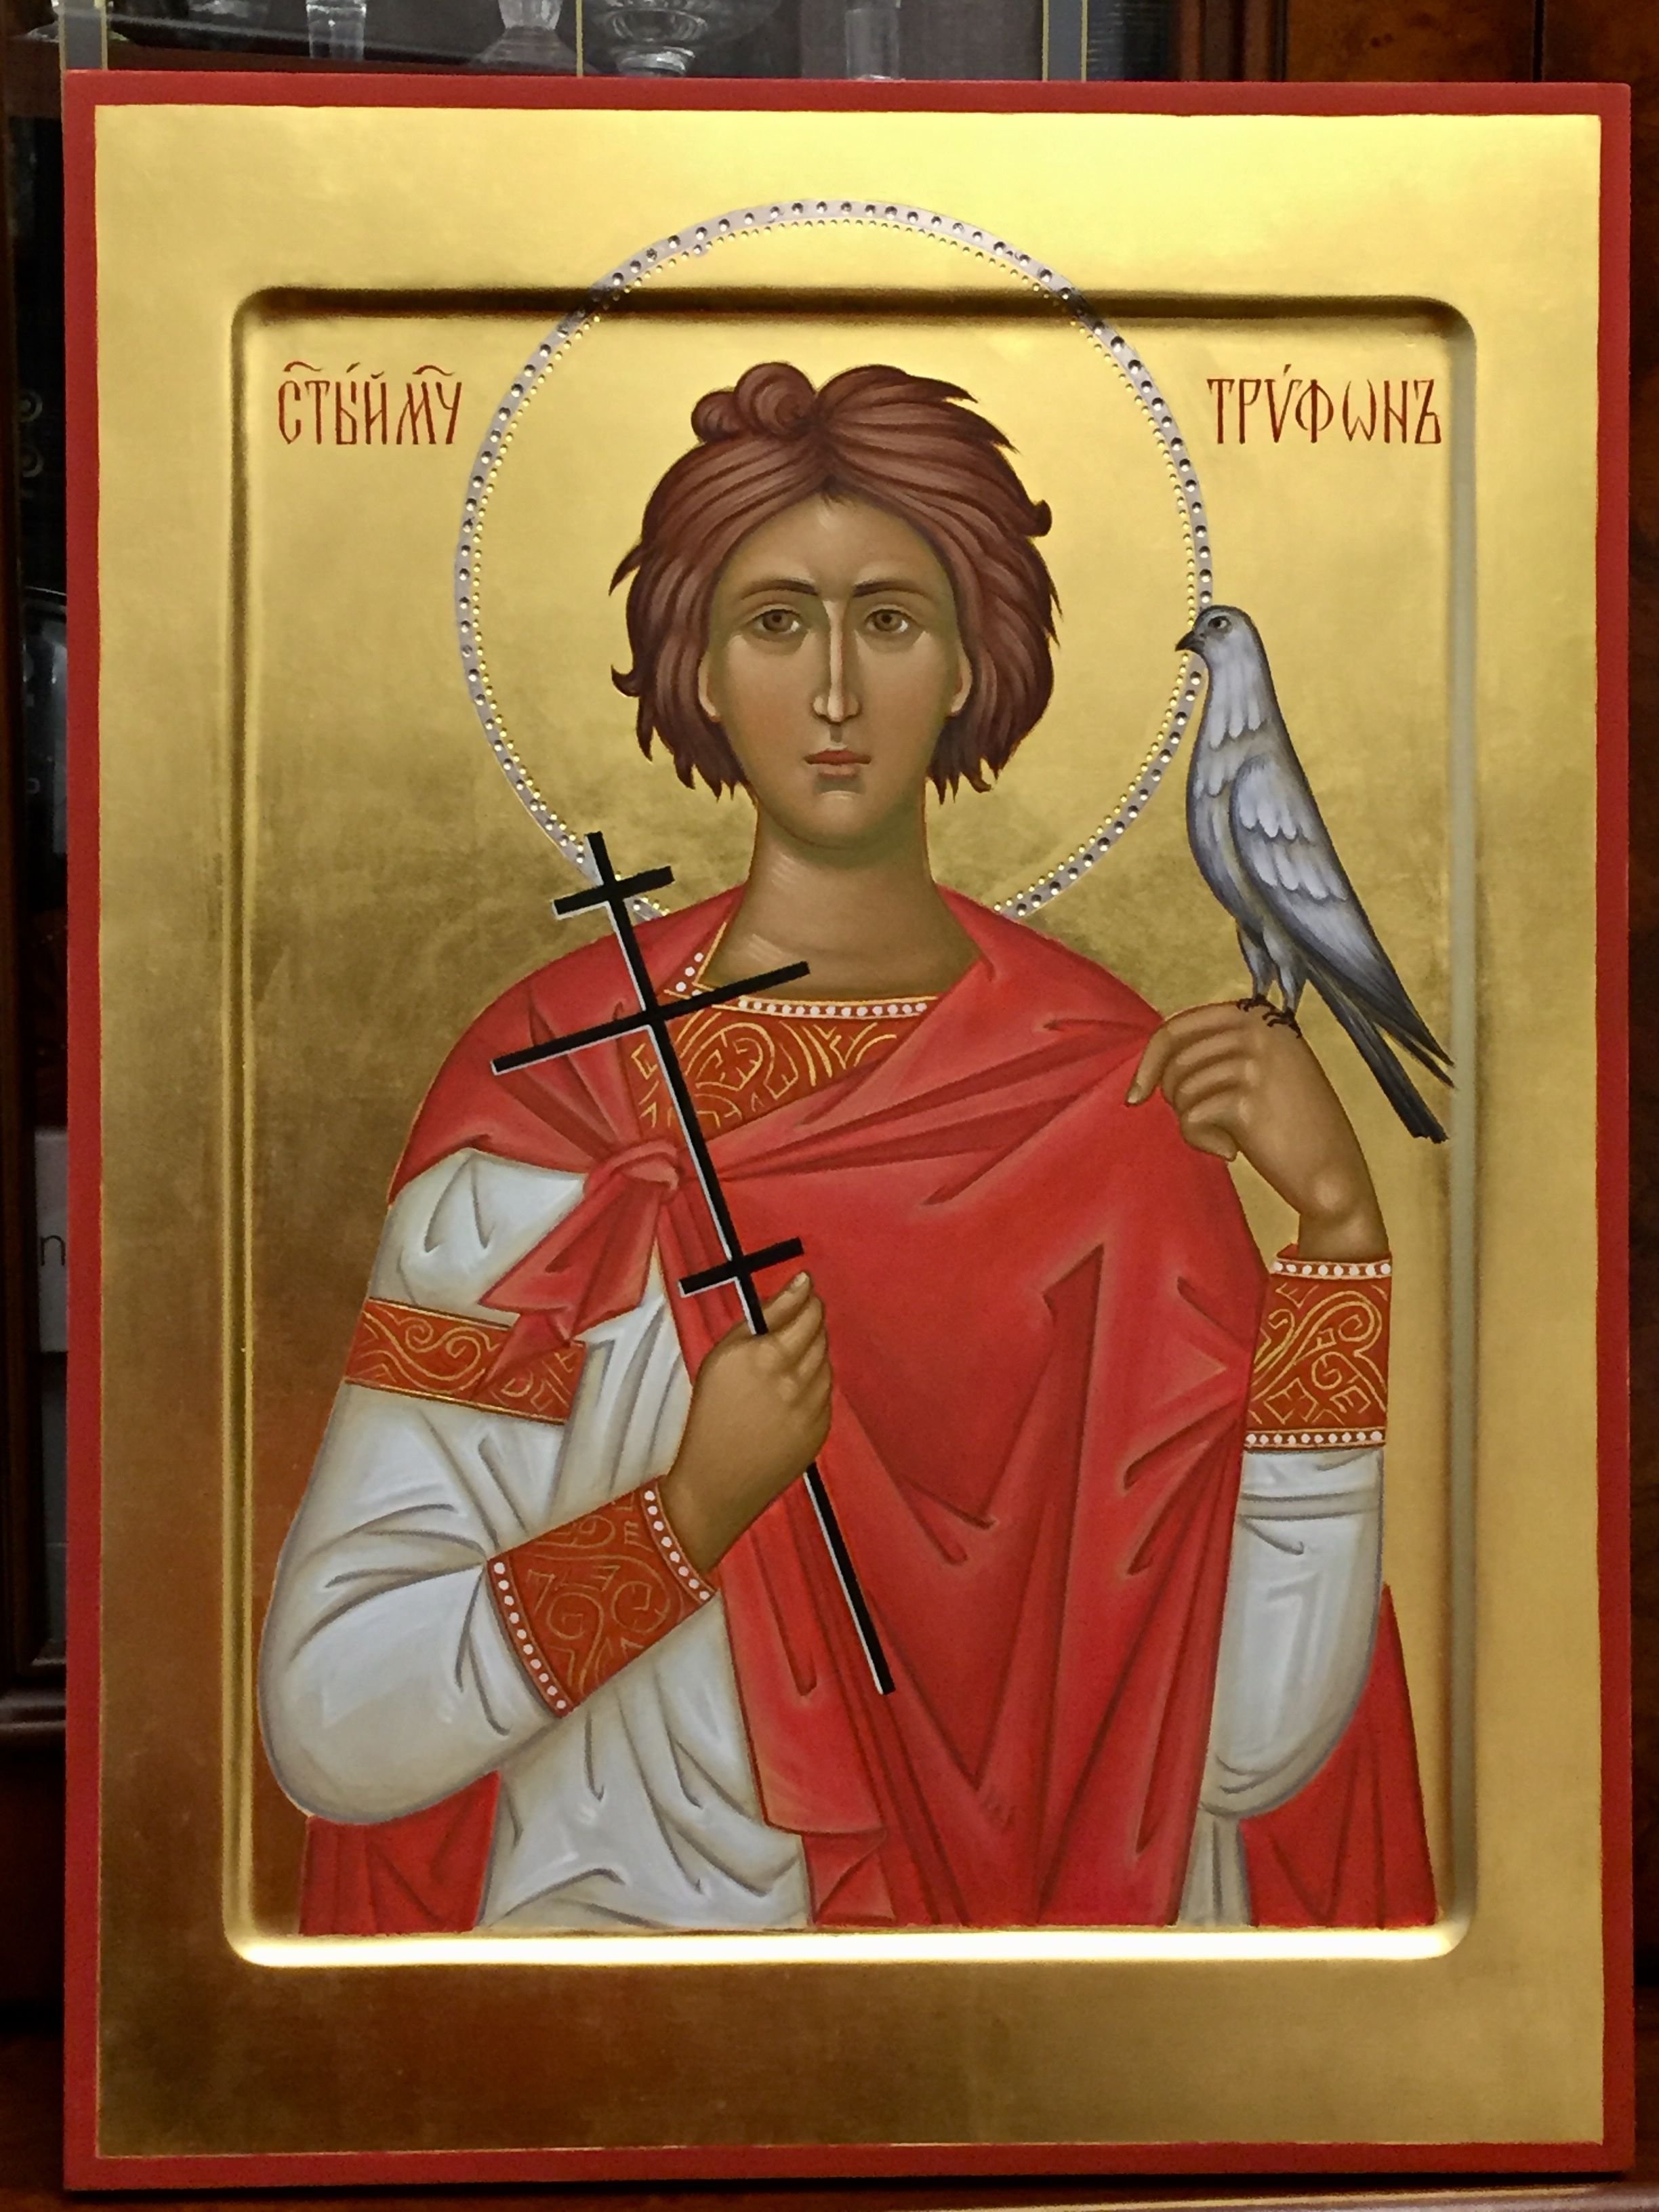 Св мч. Икона Святого мученика Трифона чудотворная.